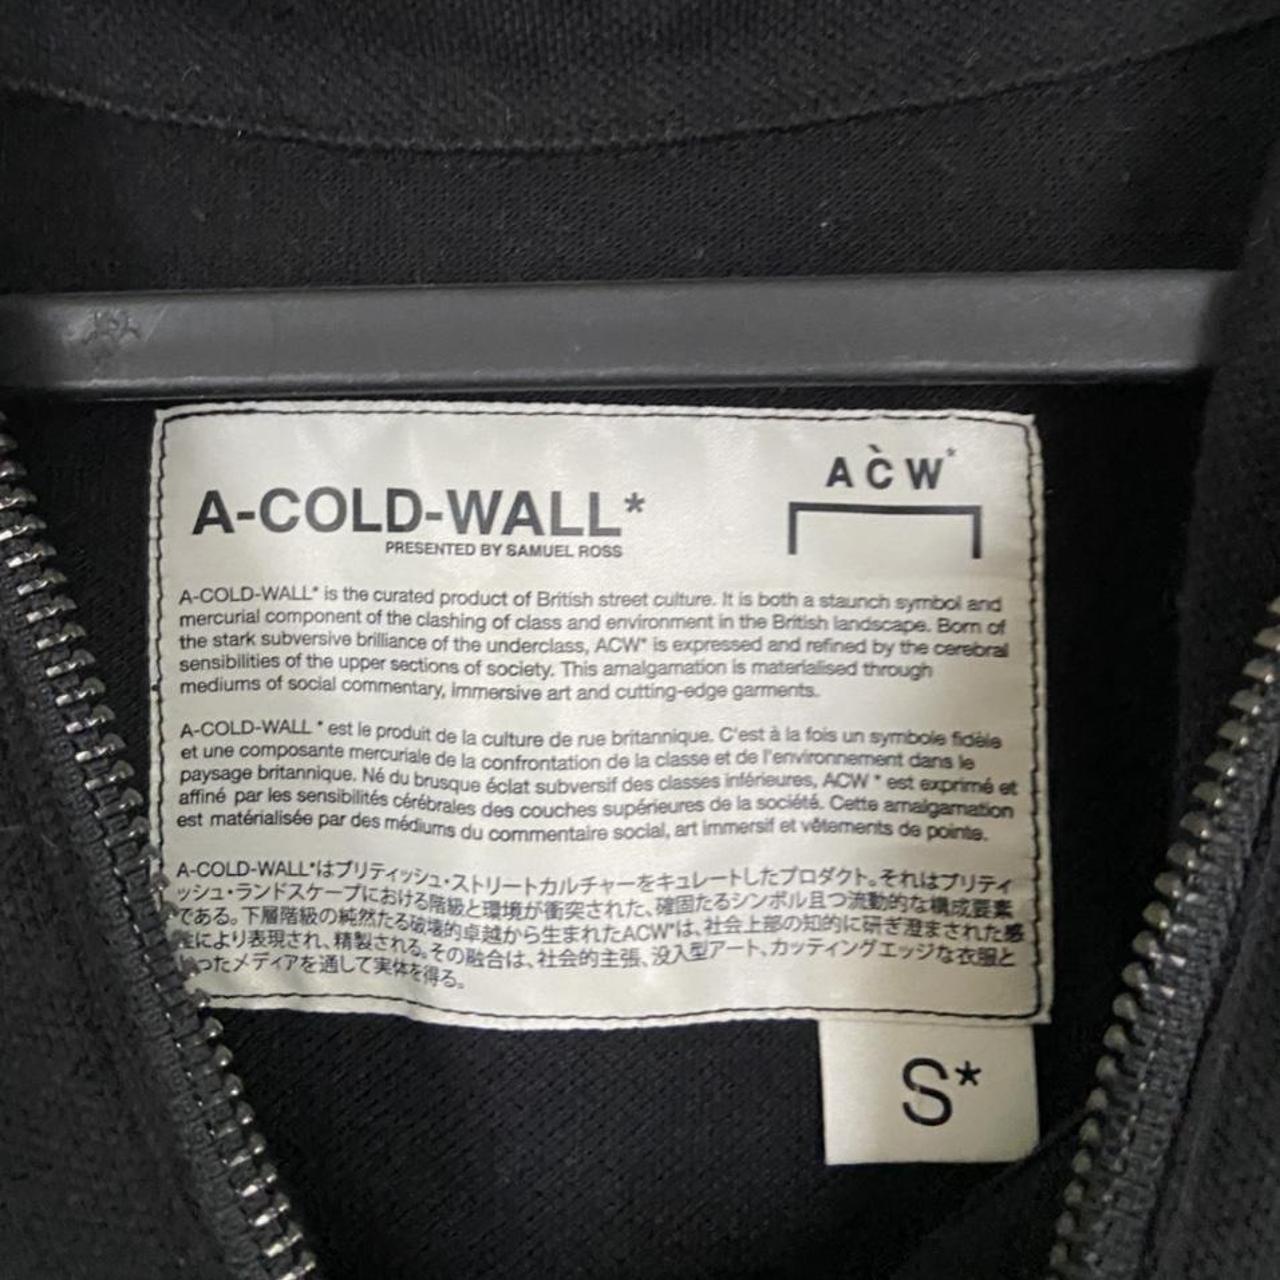 A-COLD-WALL Men's Black Shirt (3)